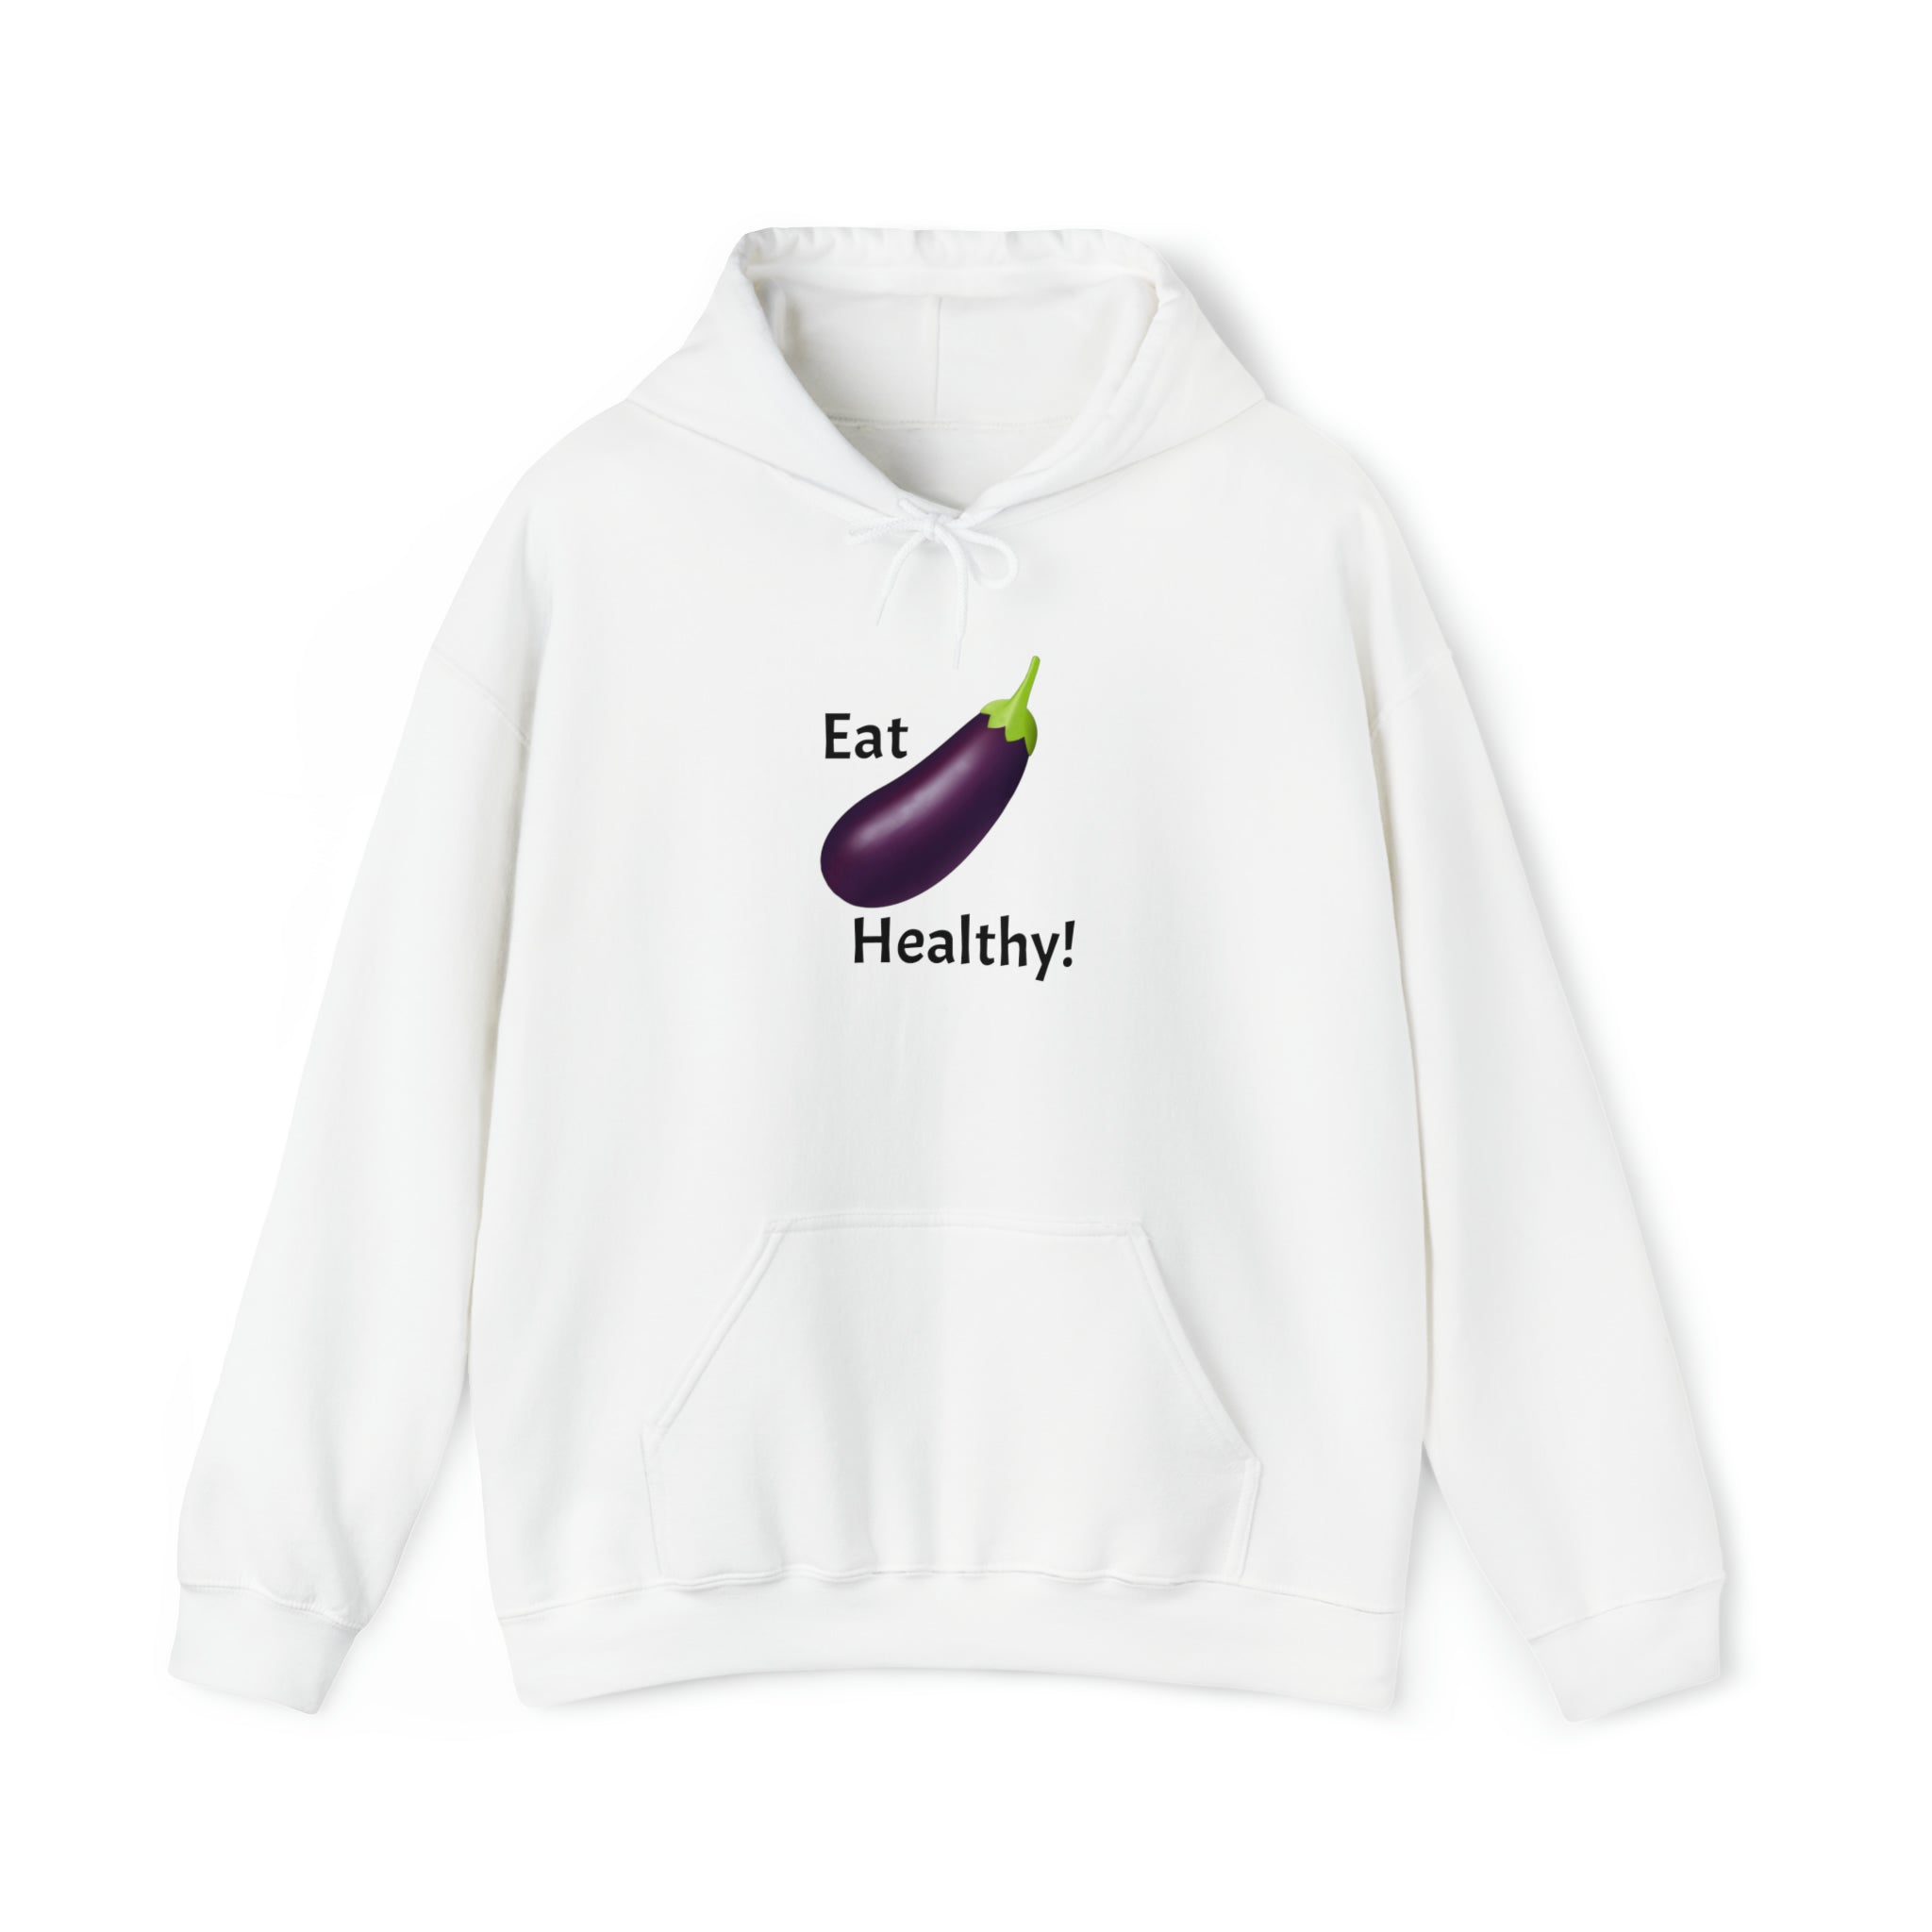 Eat Healthy! (Eggplant)